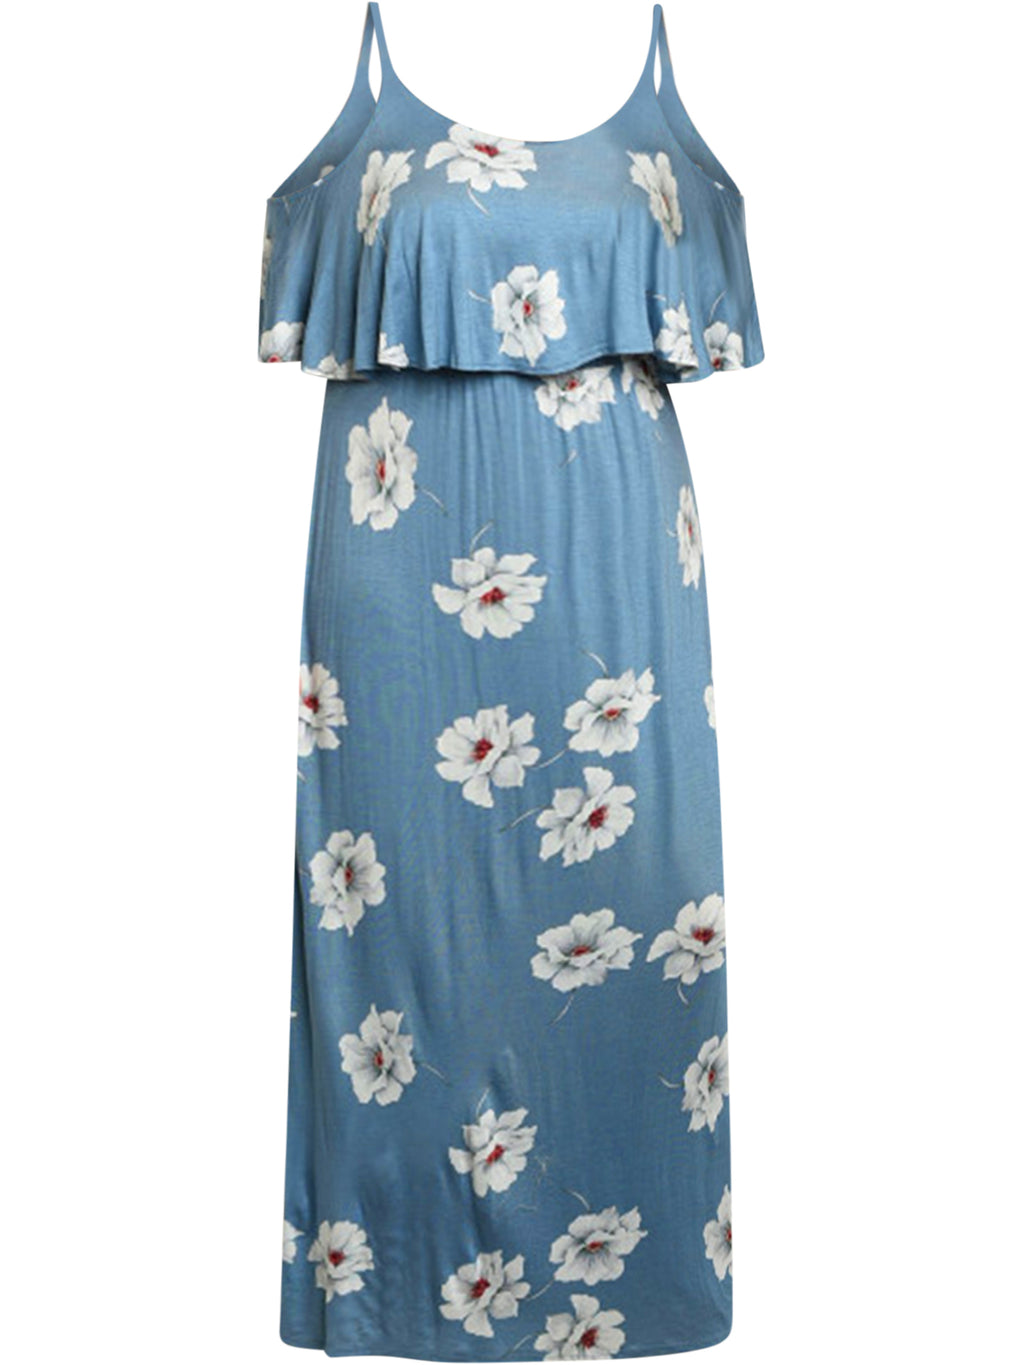 Indigo Blue Plus Size Ruffle Summer Dress